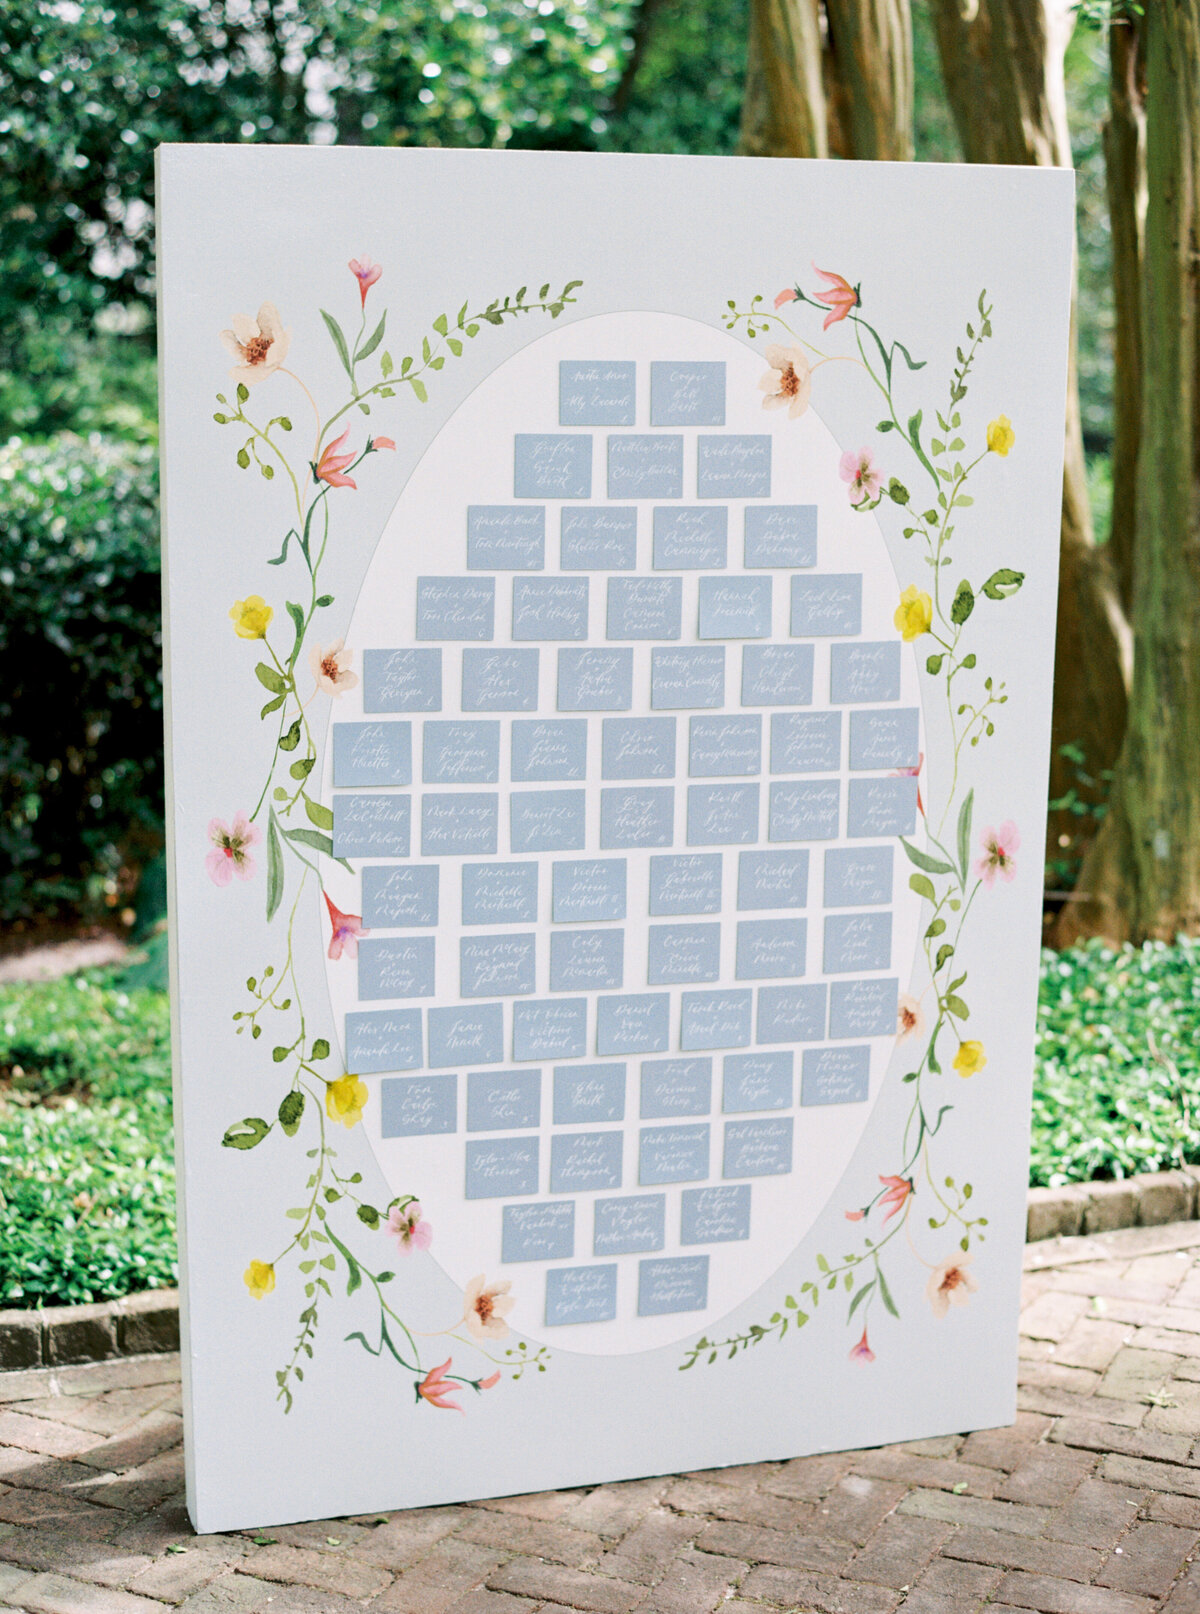 Wildflower themed wedding seating chart. Thomas Bennett House spring wedding details.